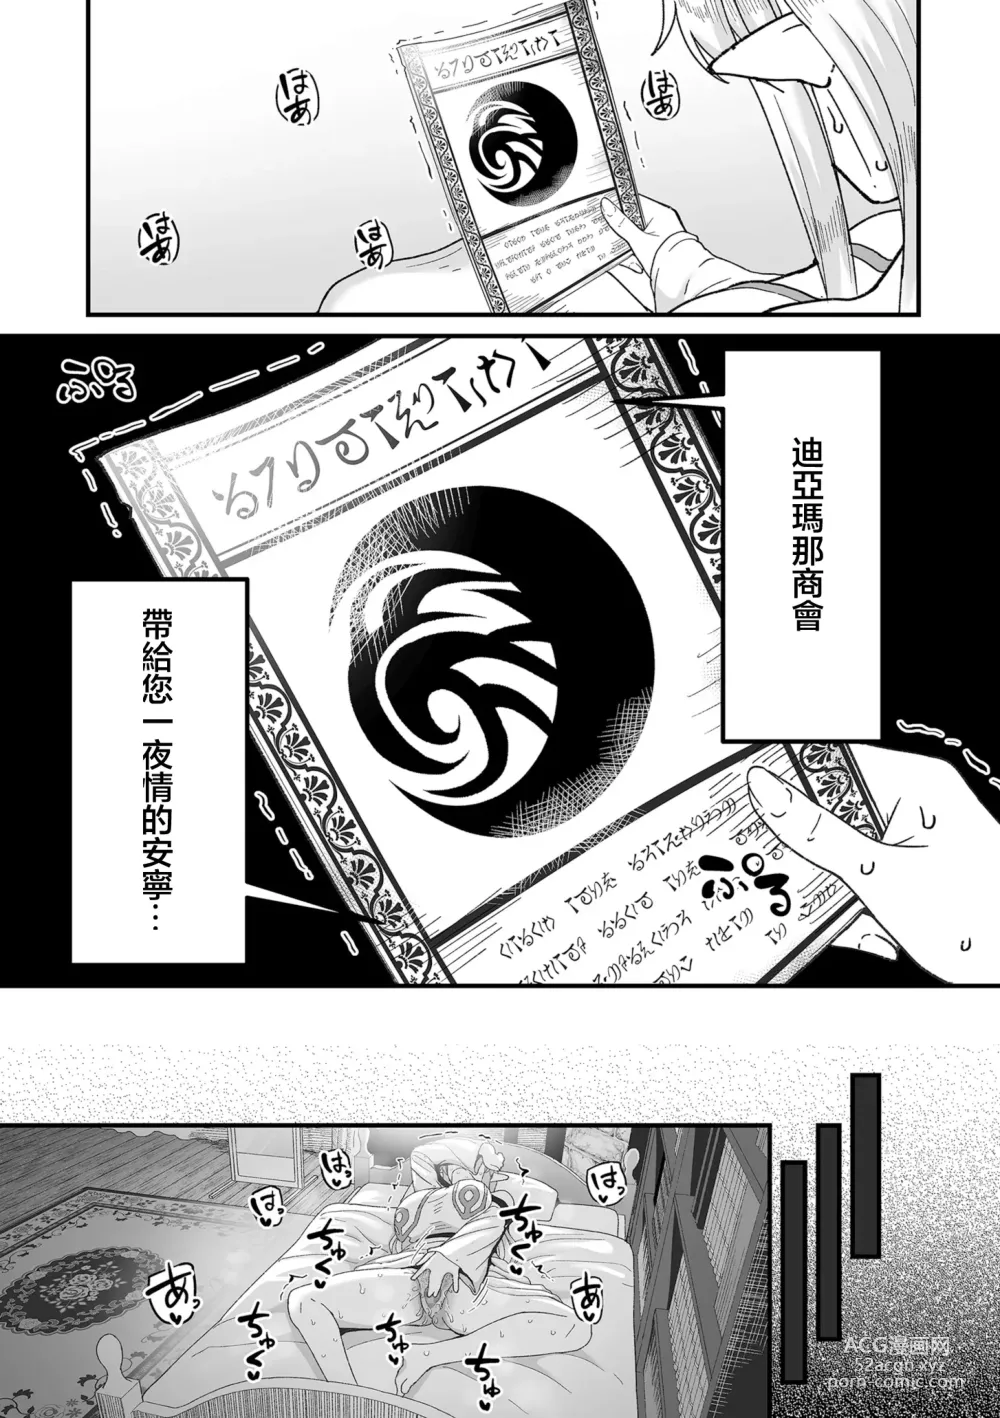 Page 2 of manga Genkai Jukujo Elf! Danshou Delivery Service!! Maki 1 no 1